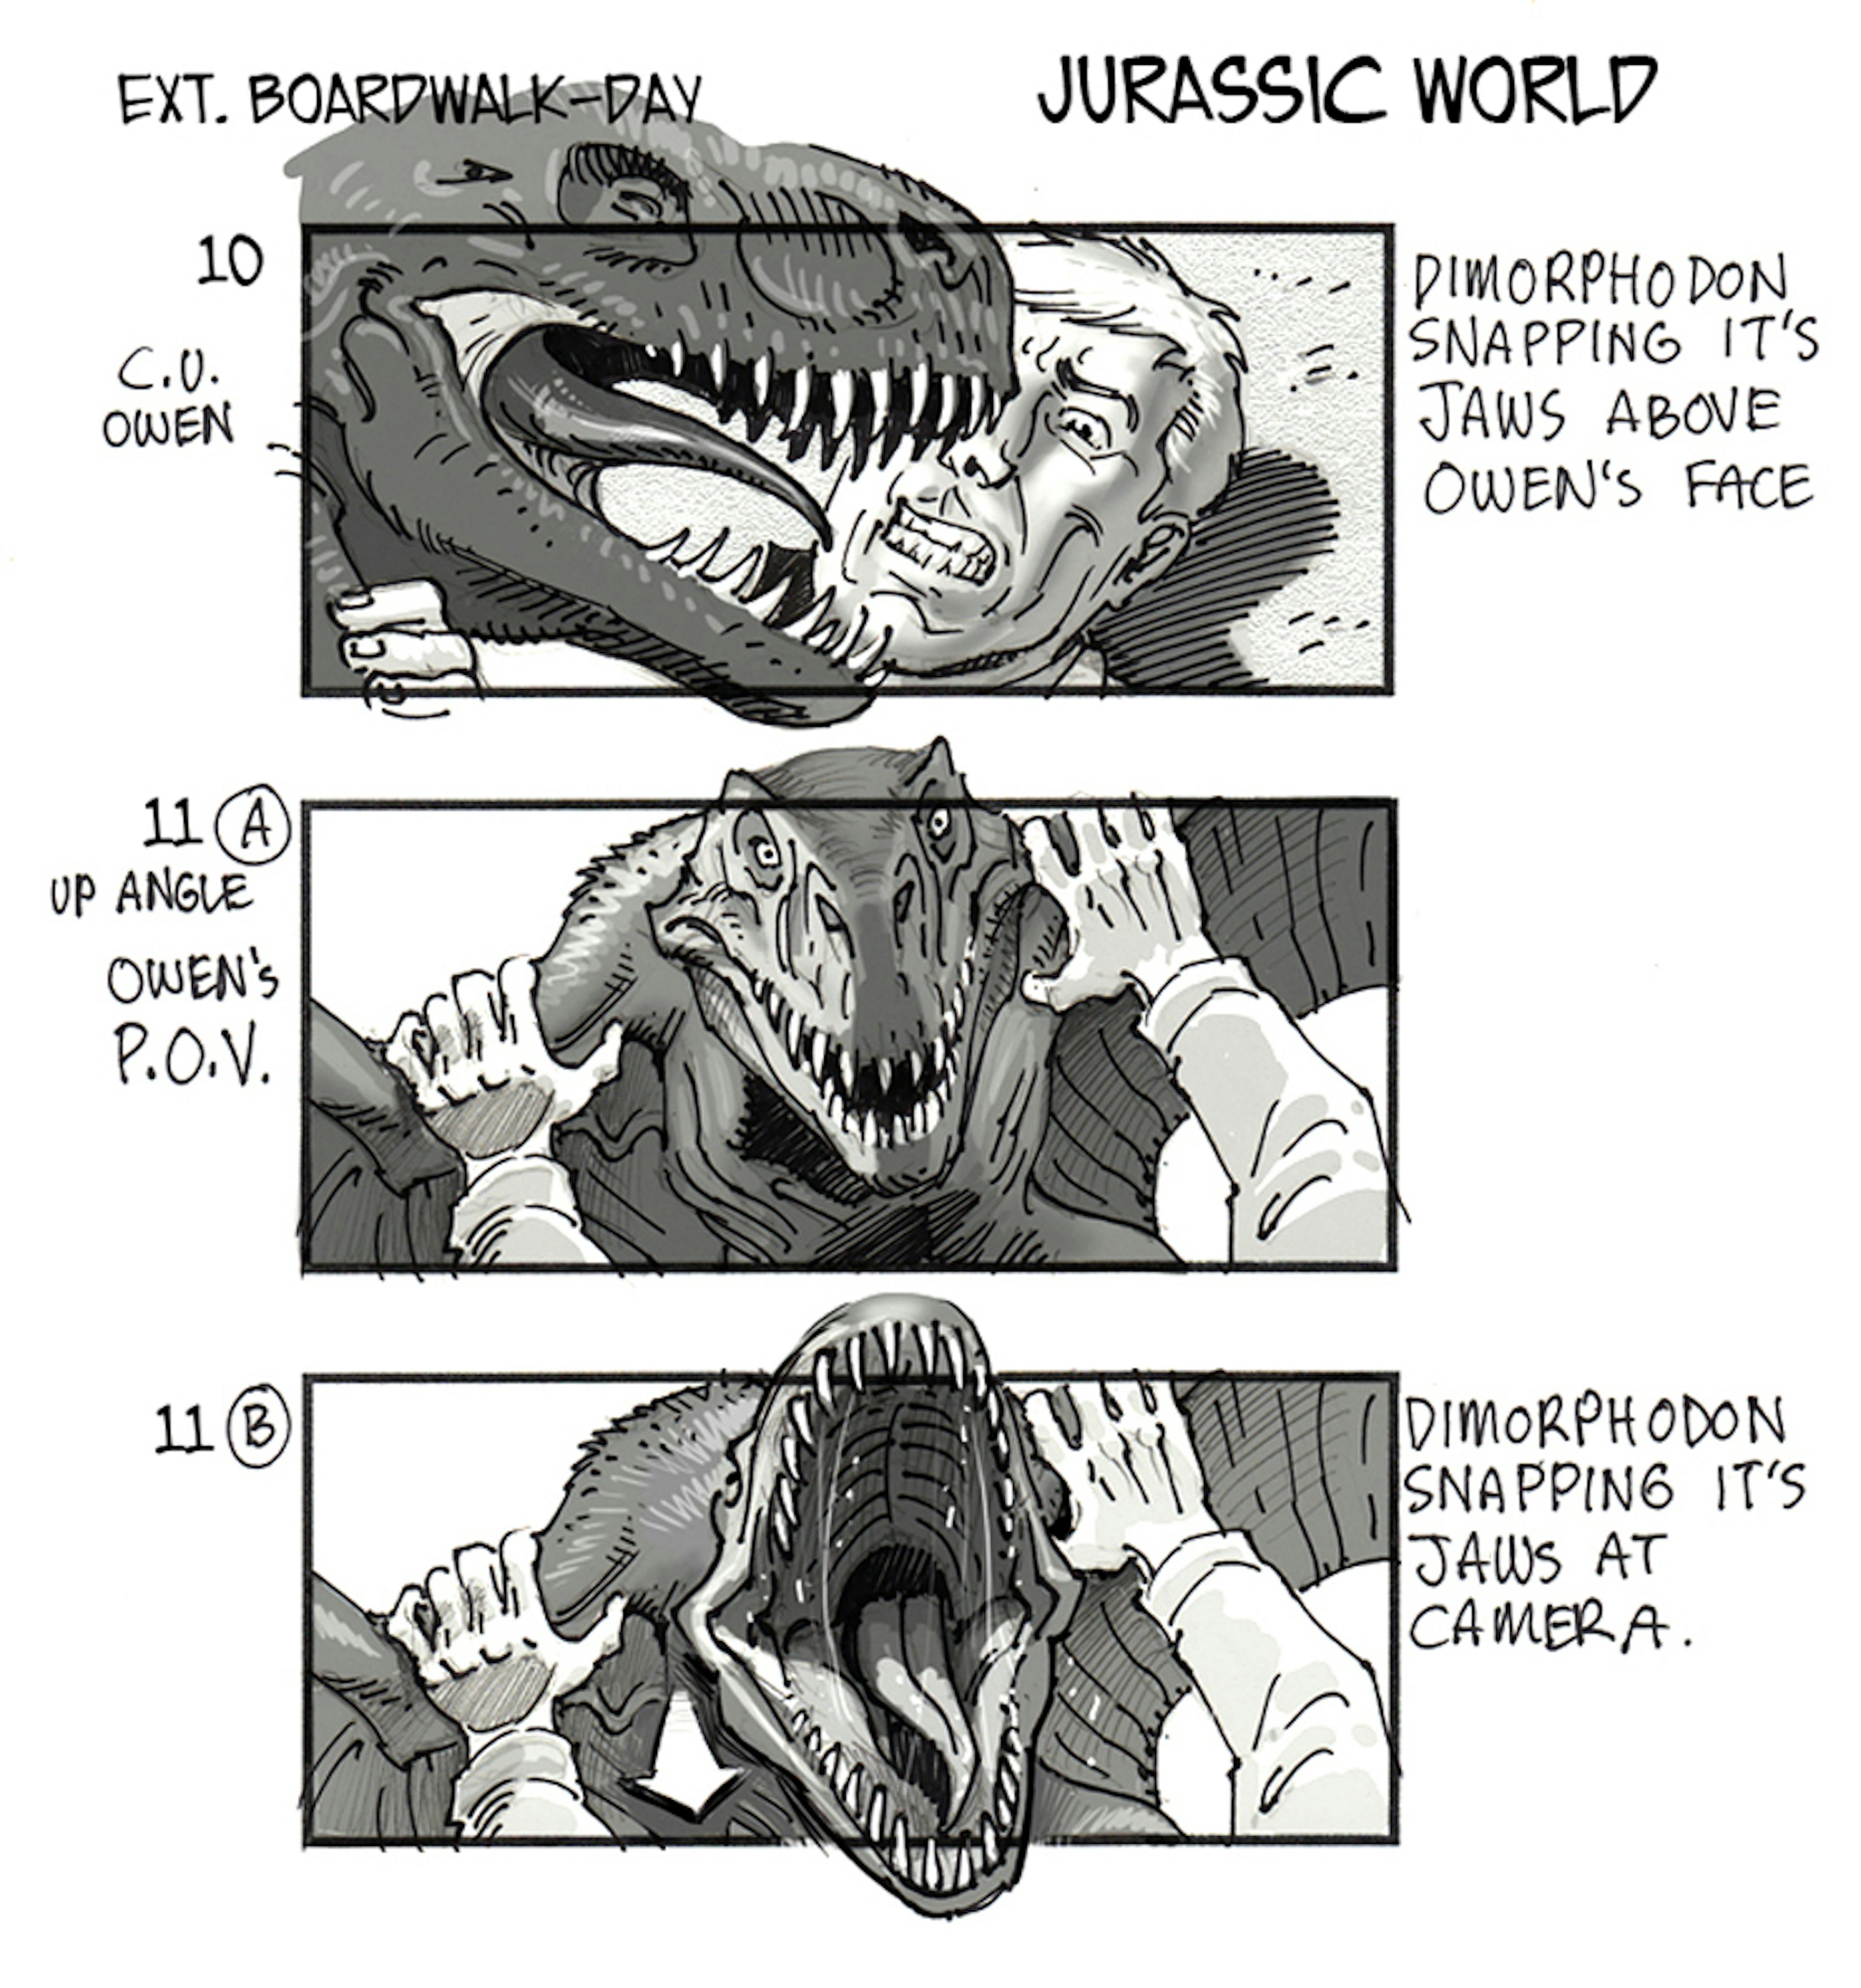 Storyboards from Jurassic World